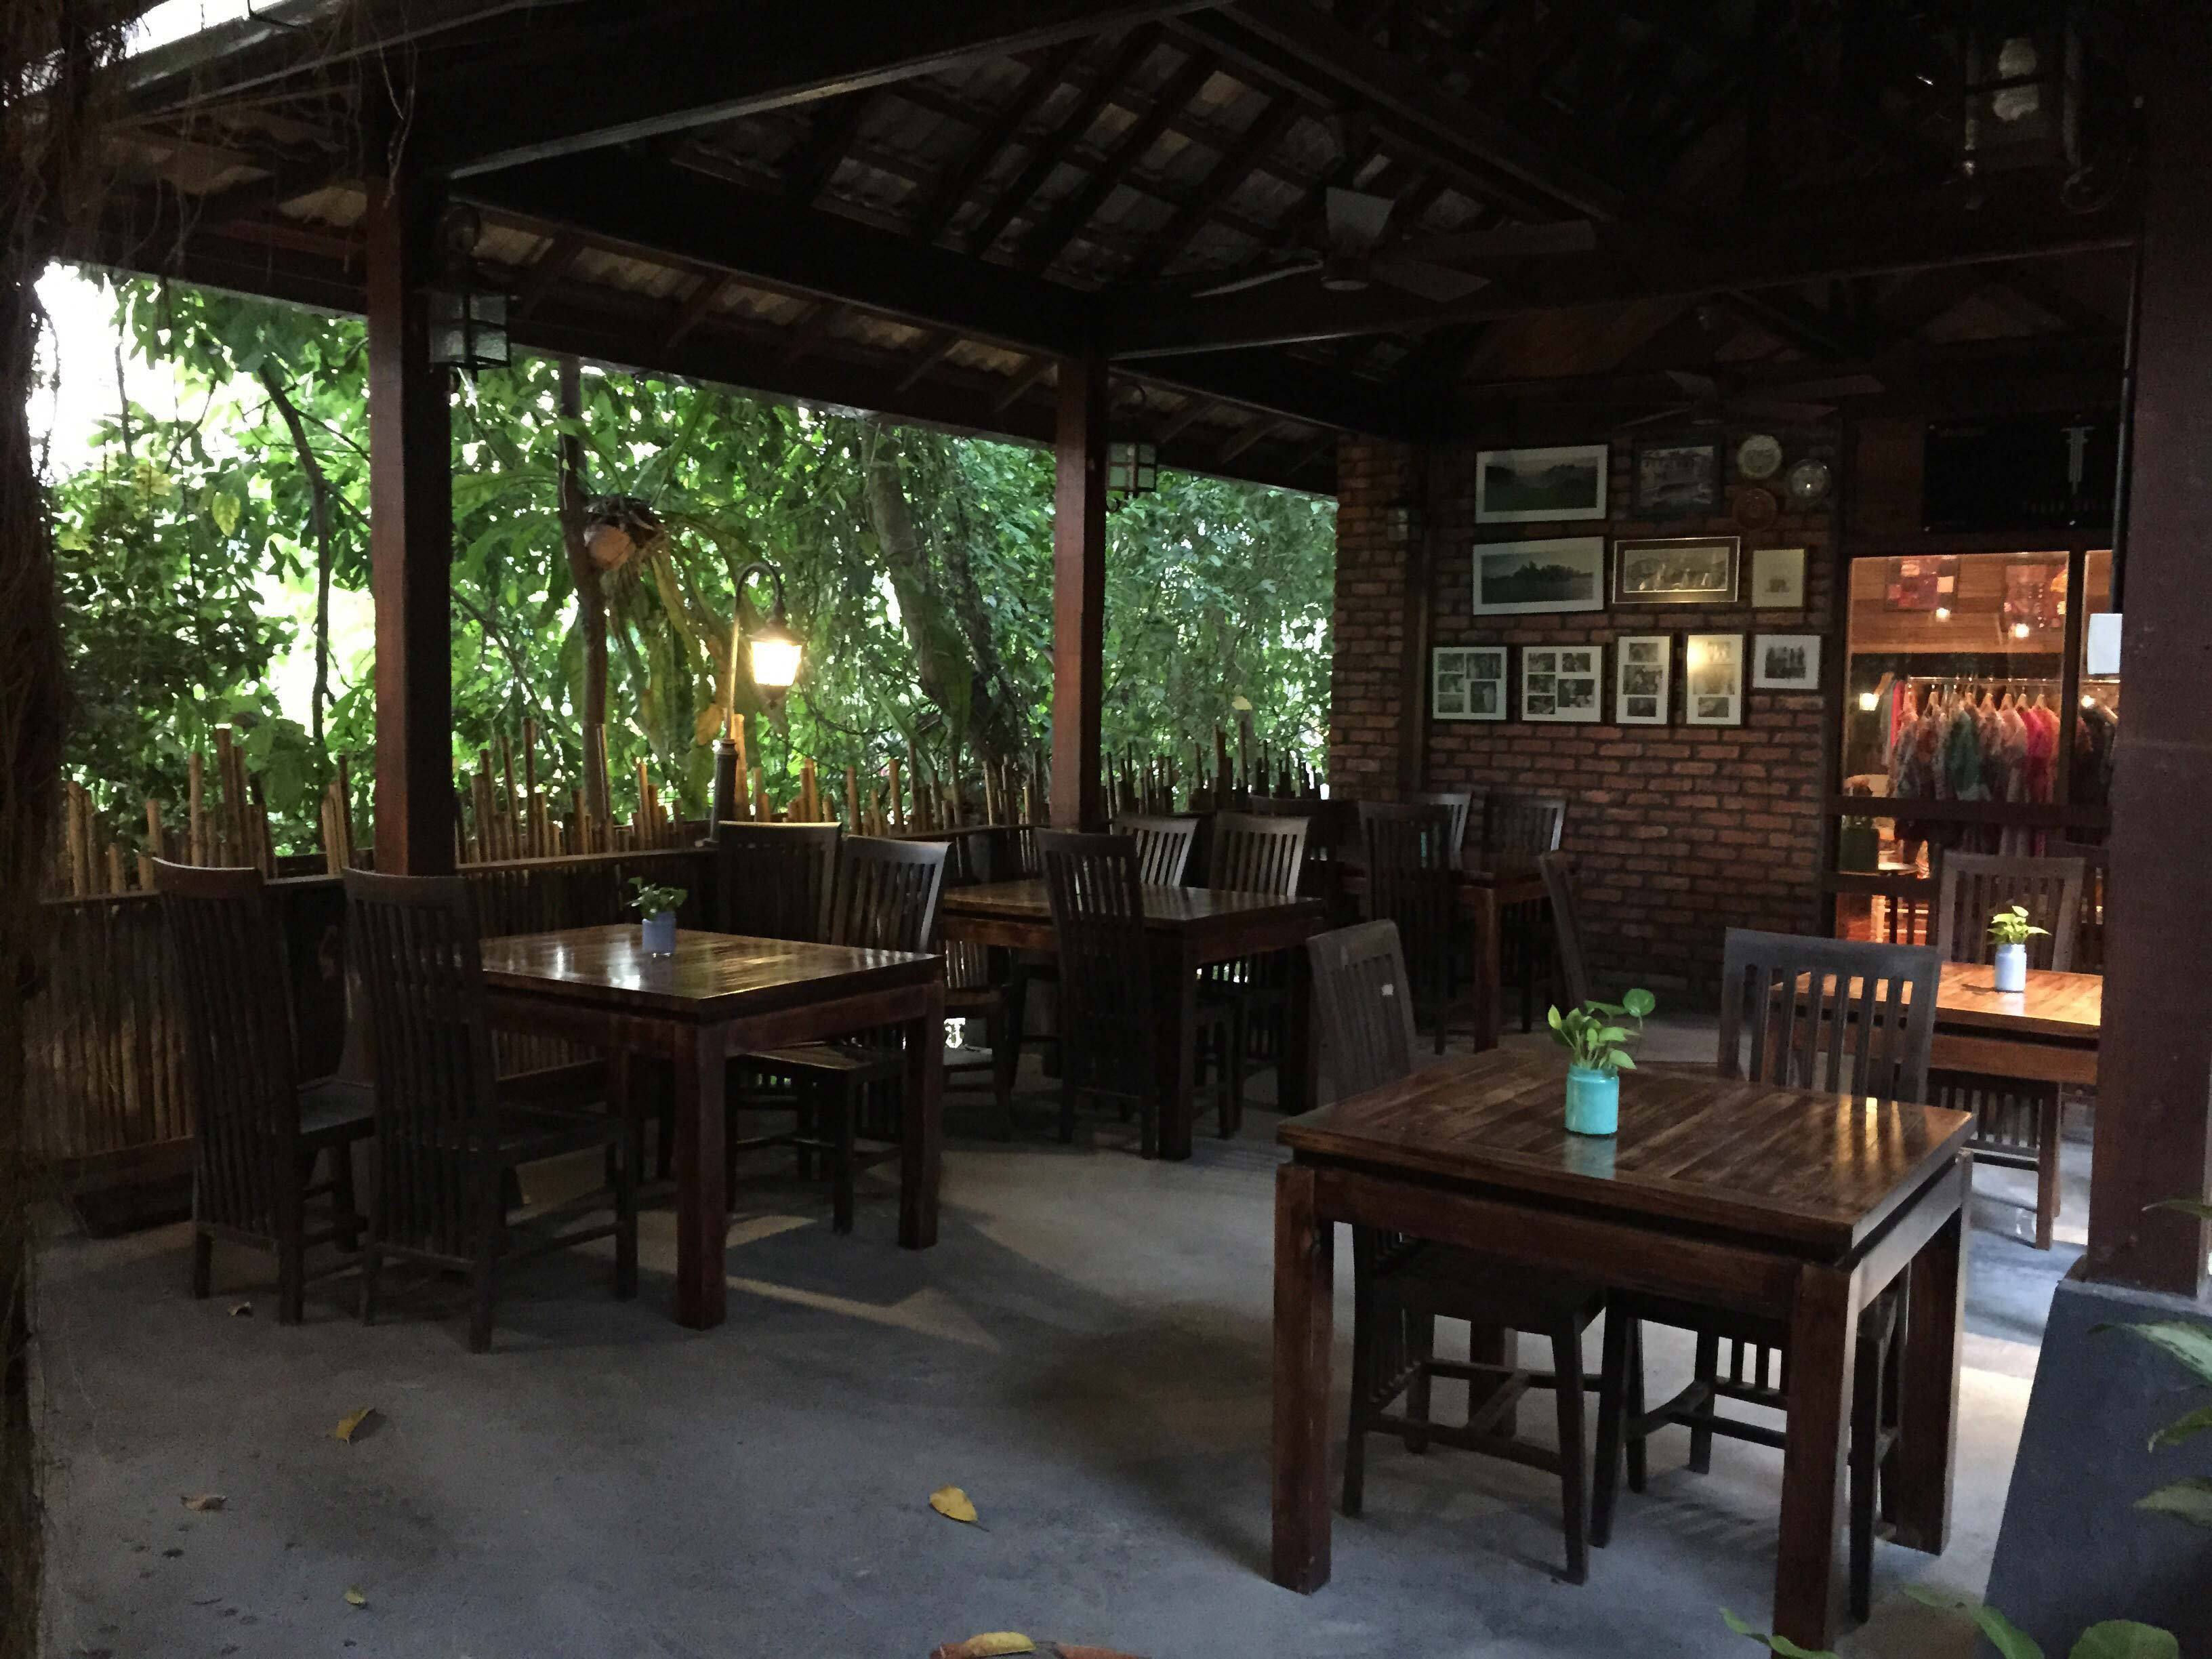 Subak Restaurant Reviews User Reviews For Subak Restaurant Mont Kiara Kuala Lumpur